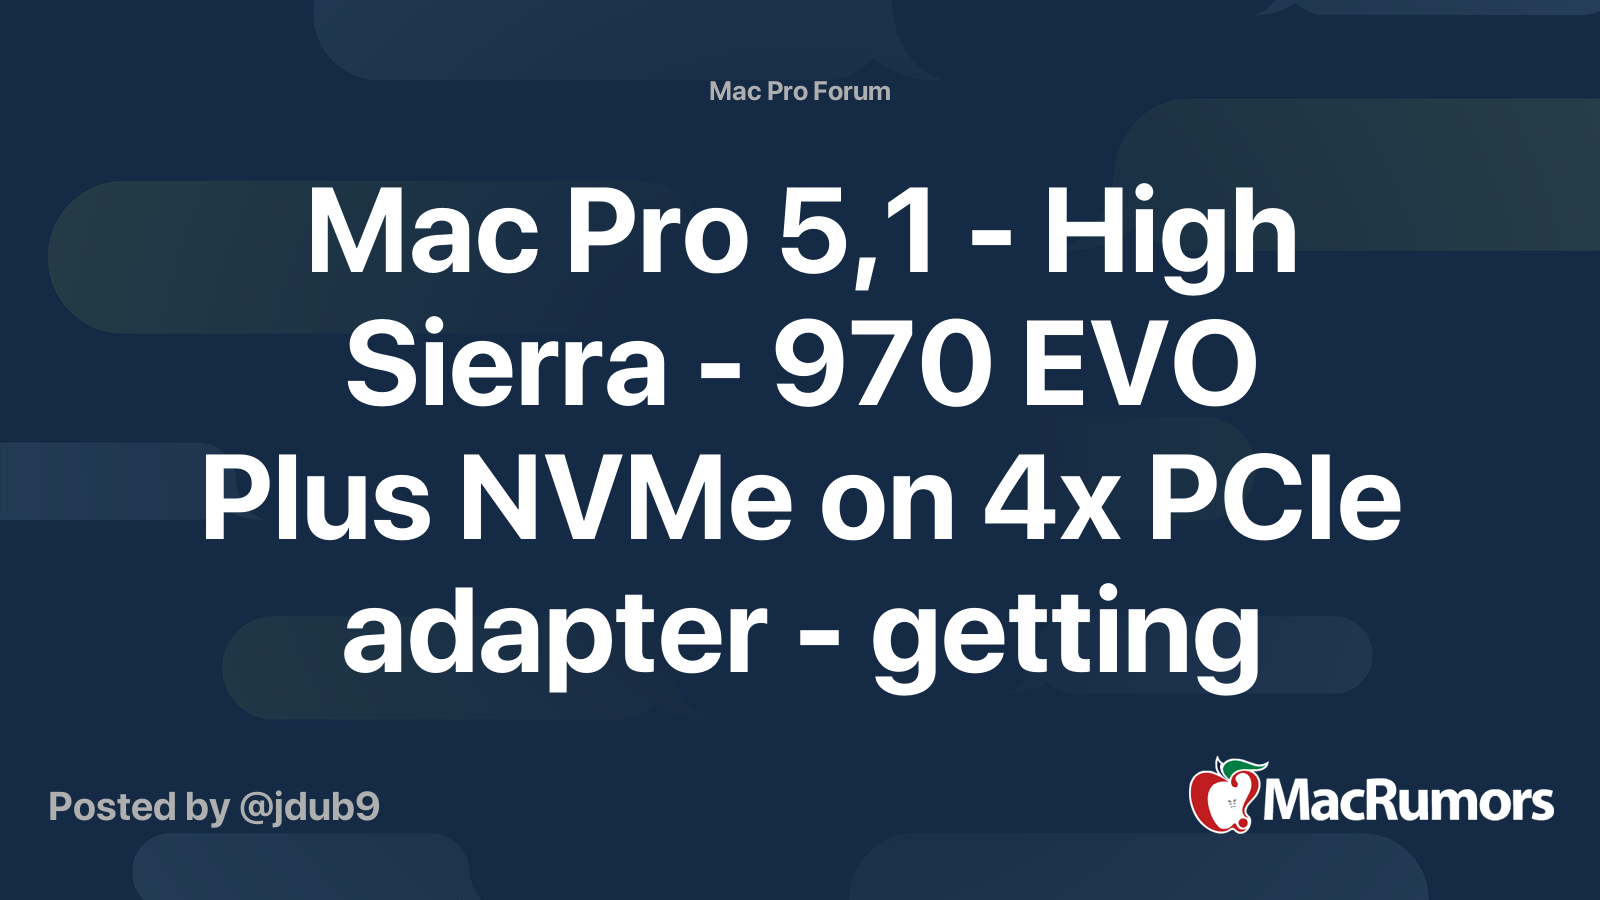 Mac Pro 5,1 - High Sierra - 970 EVO Plus NVMe on 4x PCIe adapter 